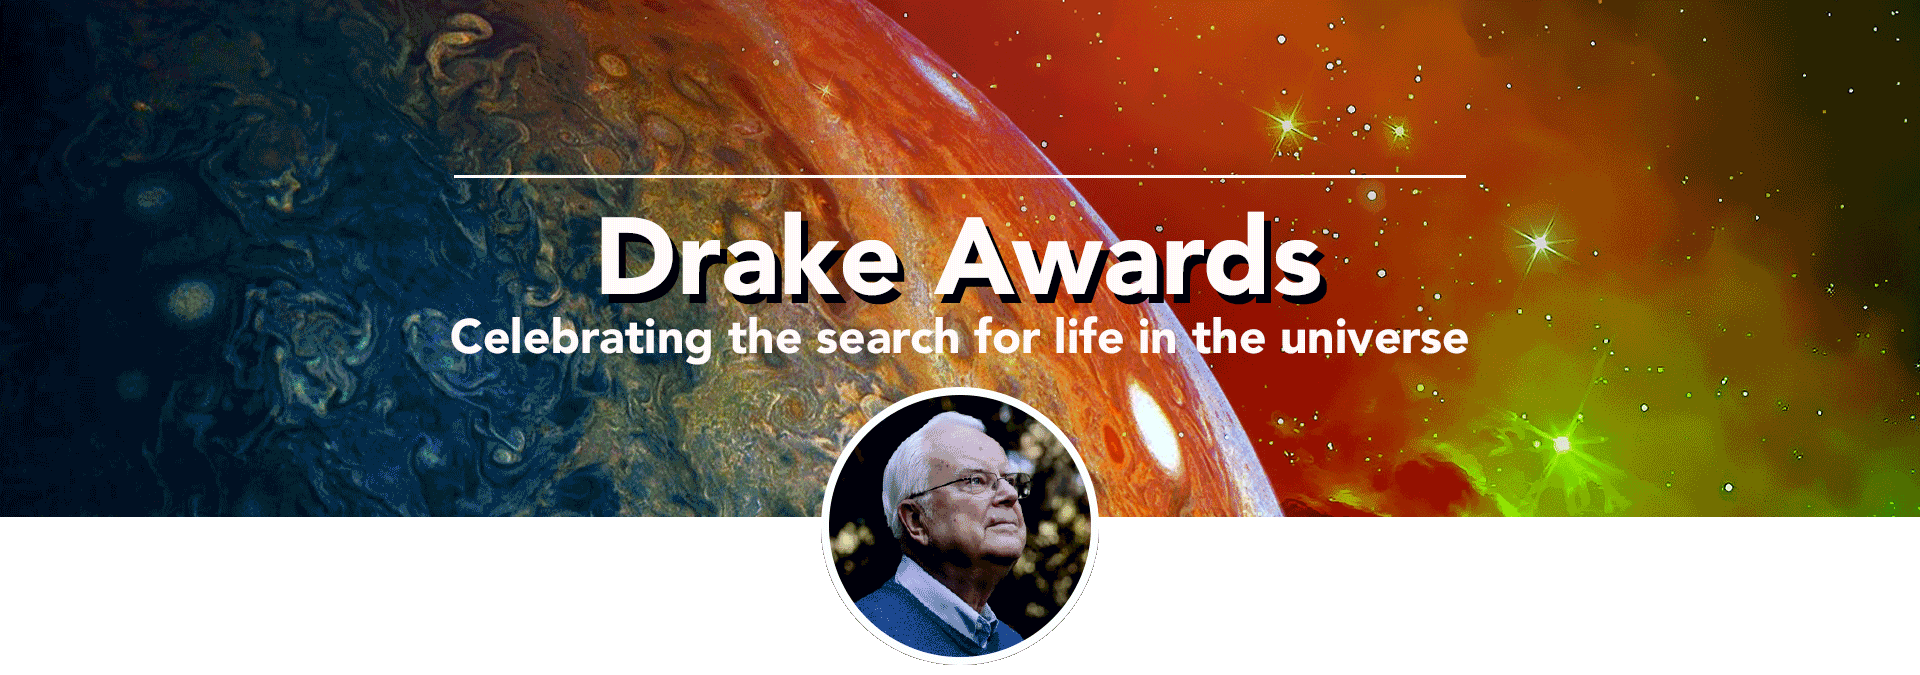 Drake Award header